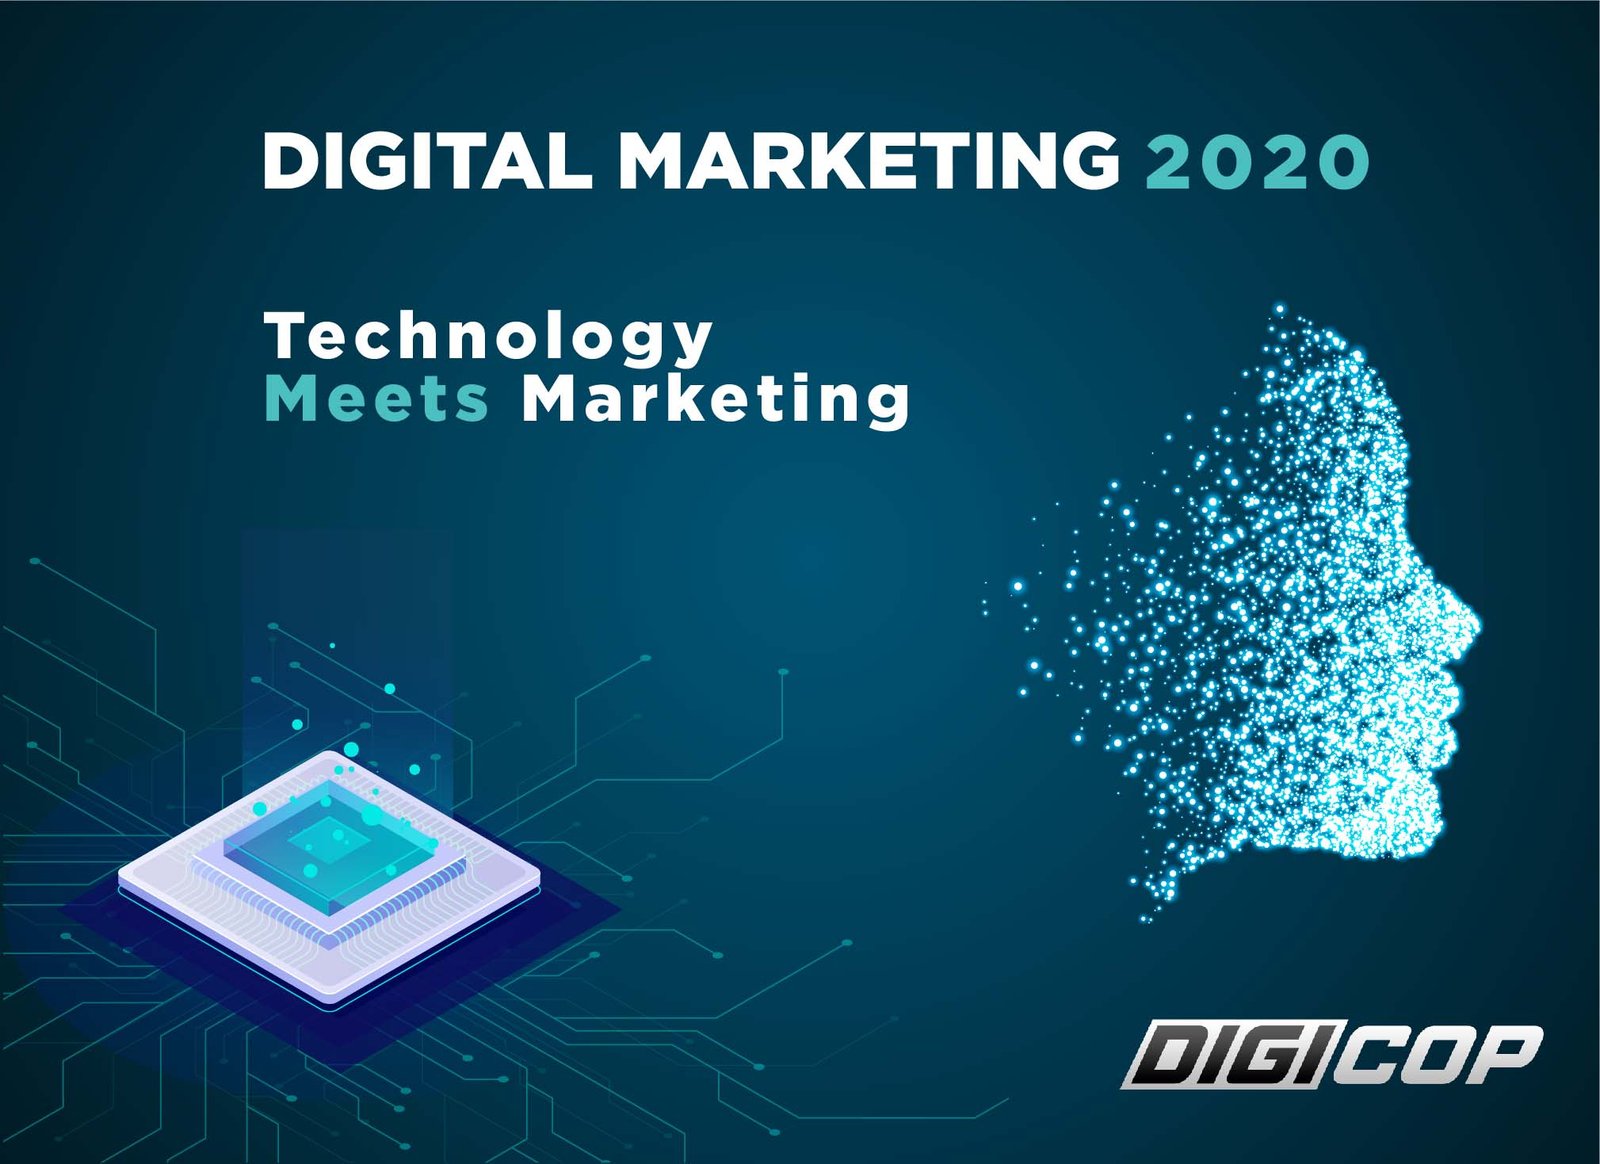 Digital marketing In 2020 – Technology Meets marketing